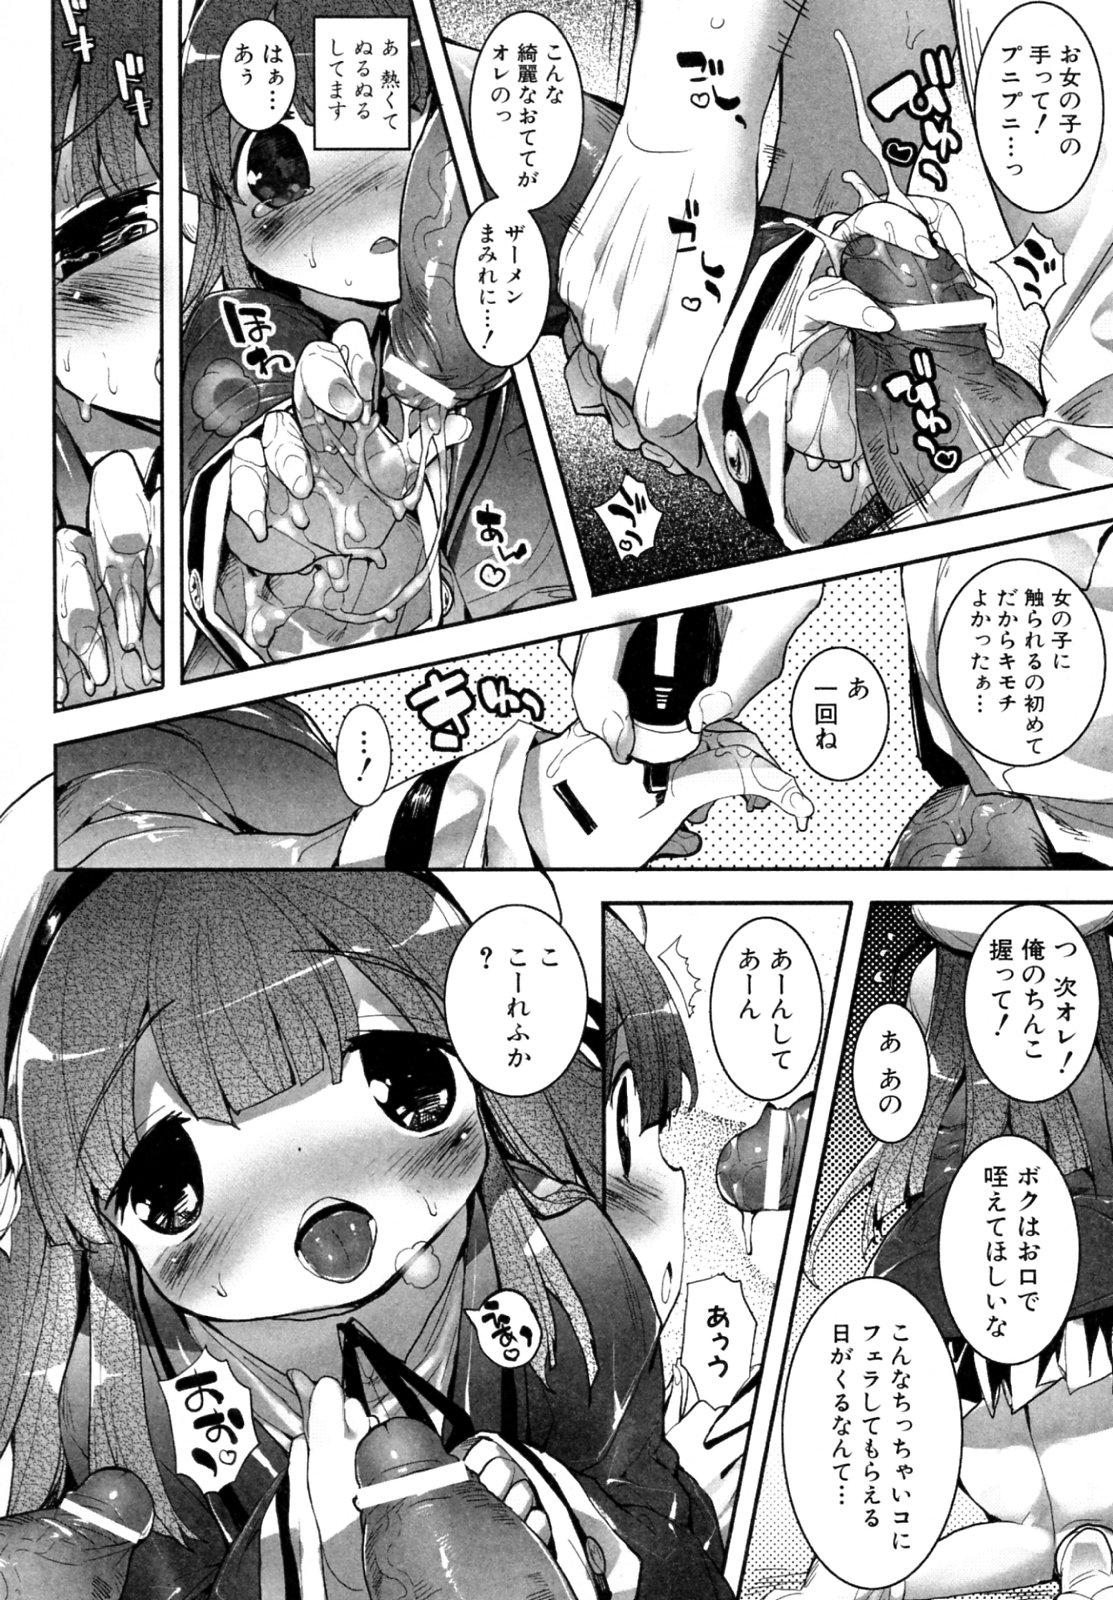 Masterbation Yotsuchichi Exposed - Page 10